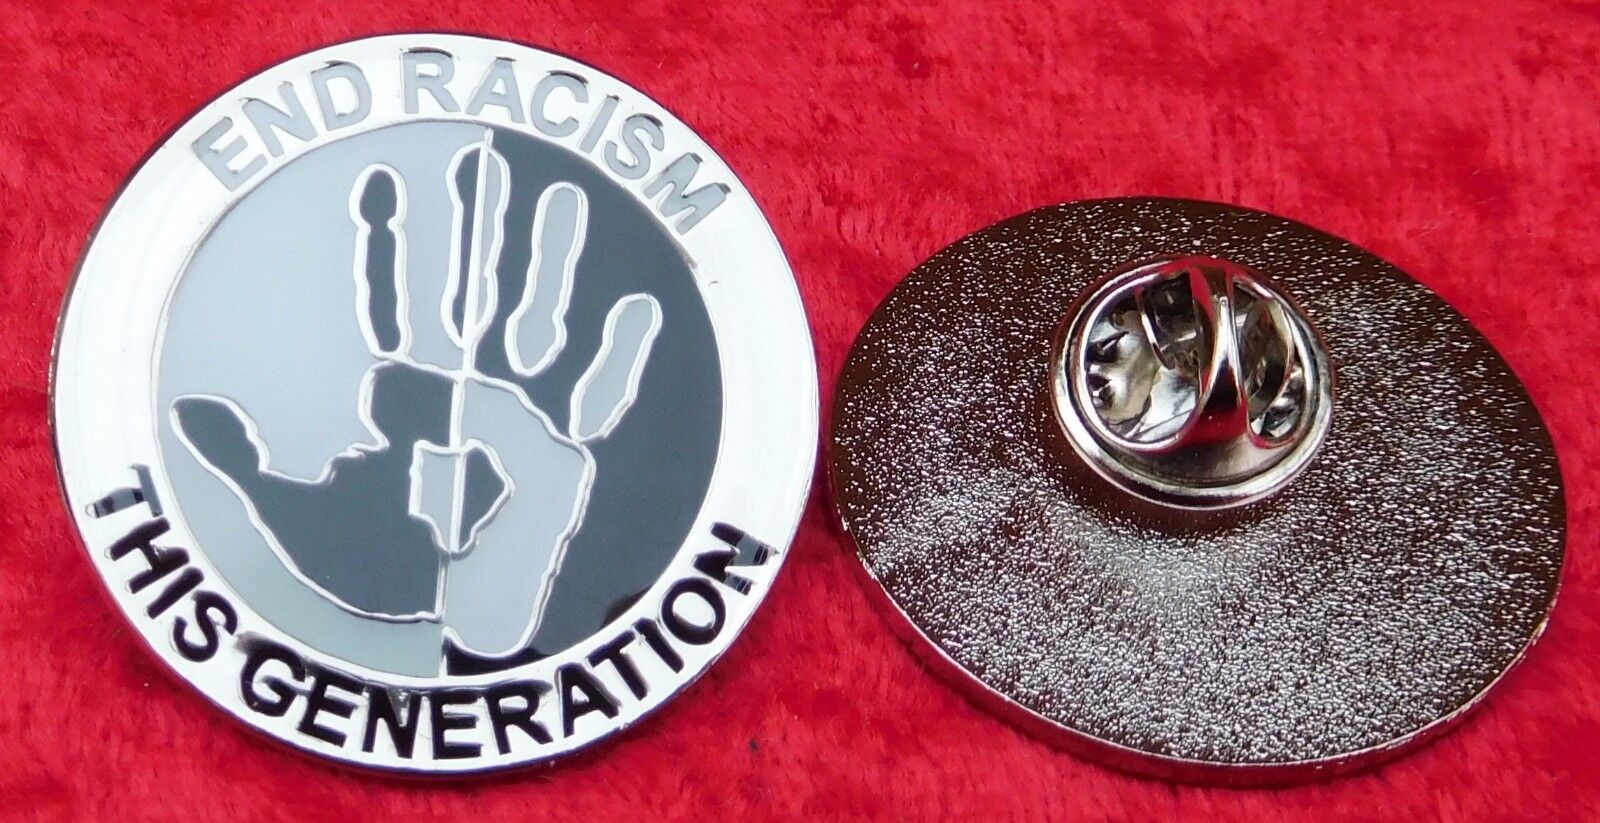 End Racism Lapel Pin Badge Anti Racist / Fascist Solidarity Protest Symbol